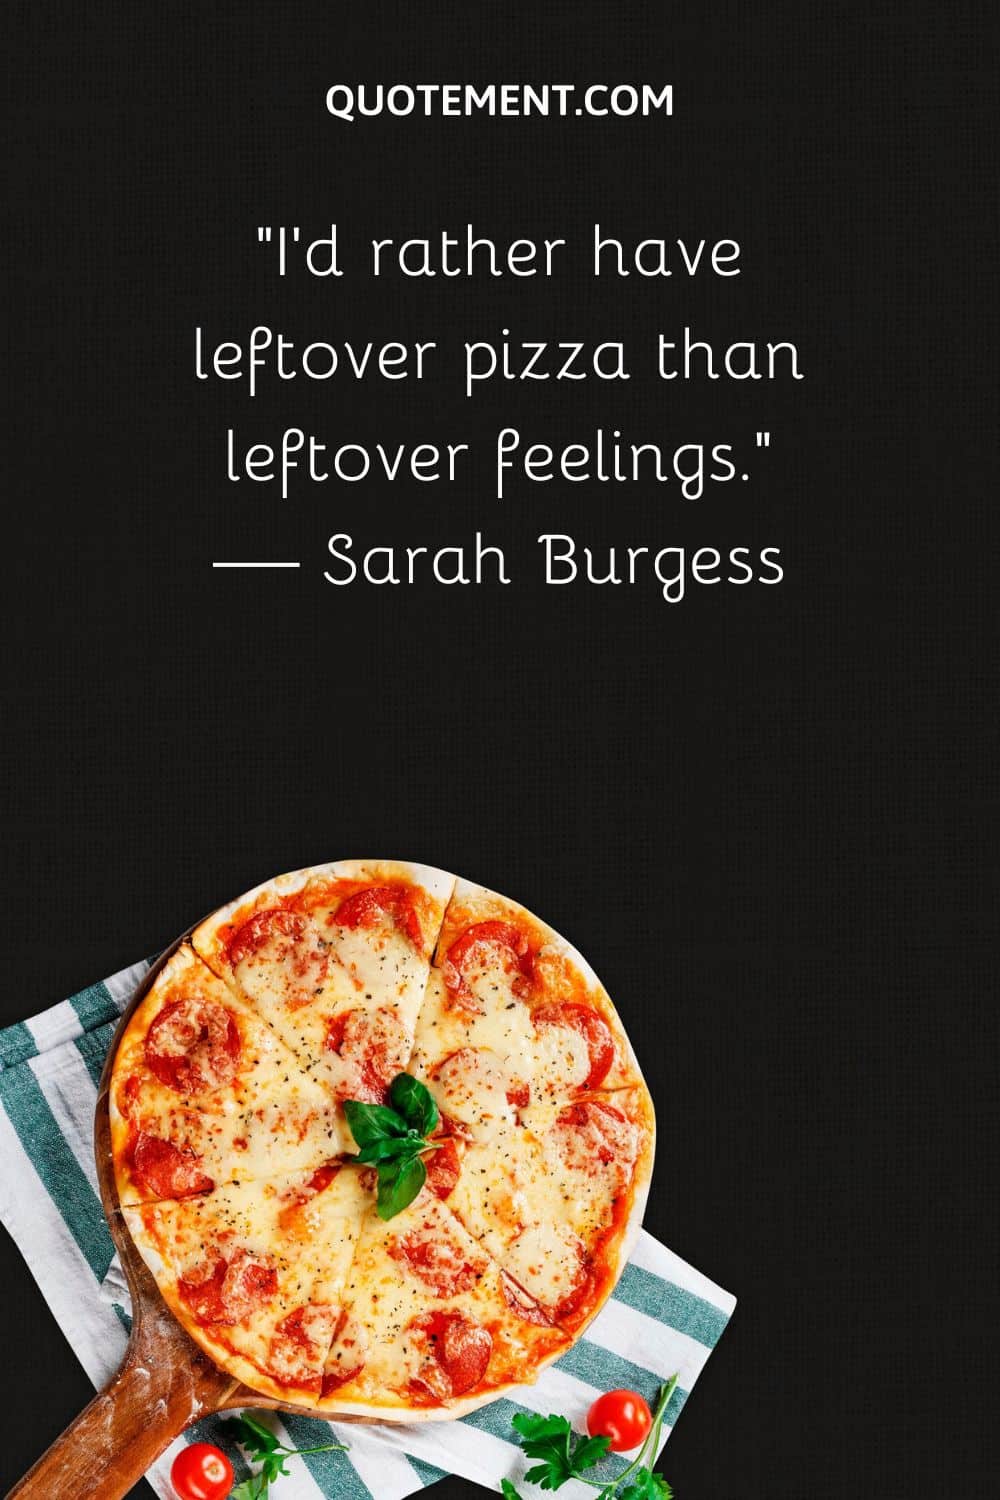 I’d rather have leftover pizza than leftover feelings